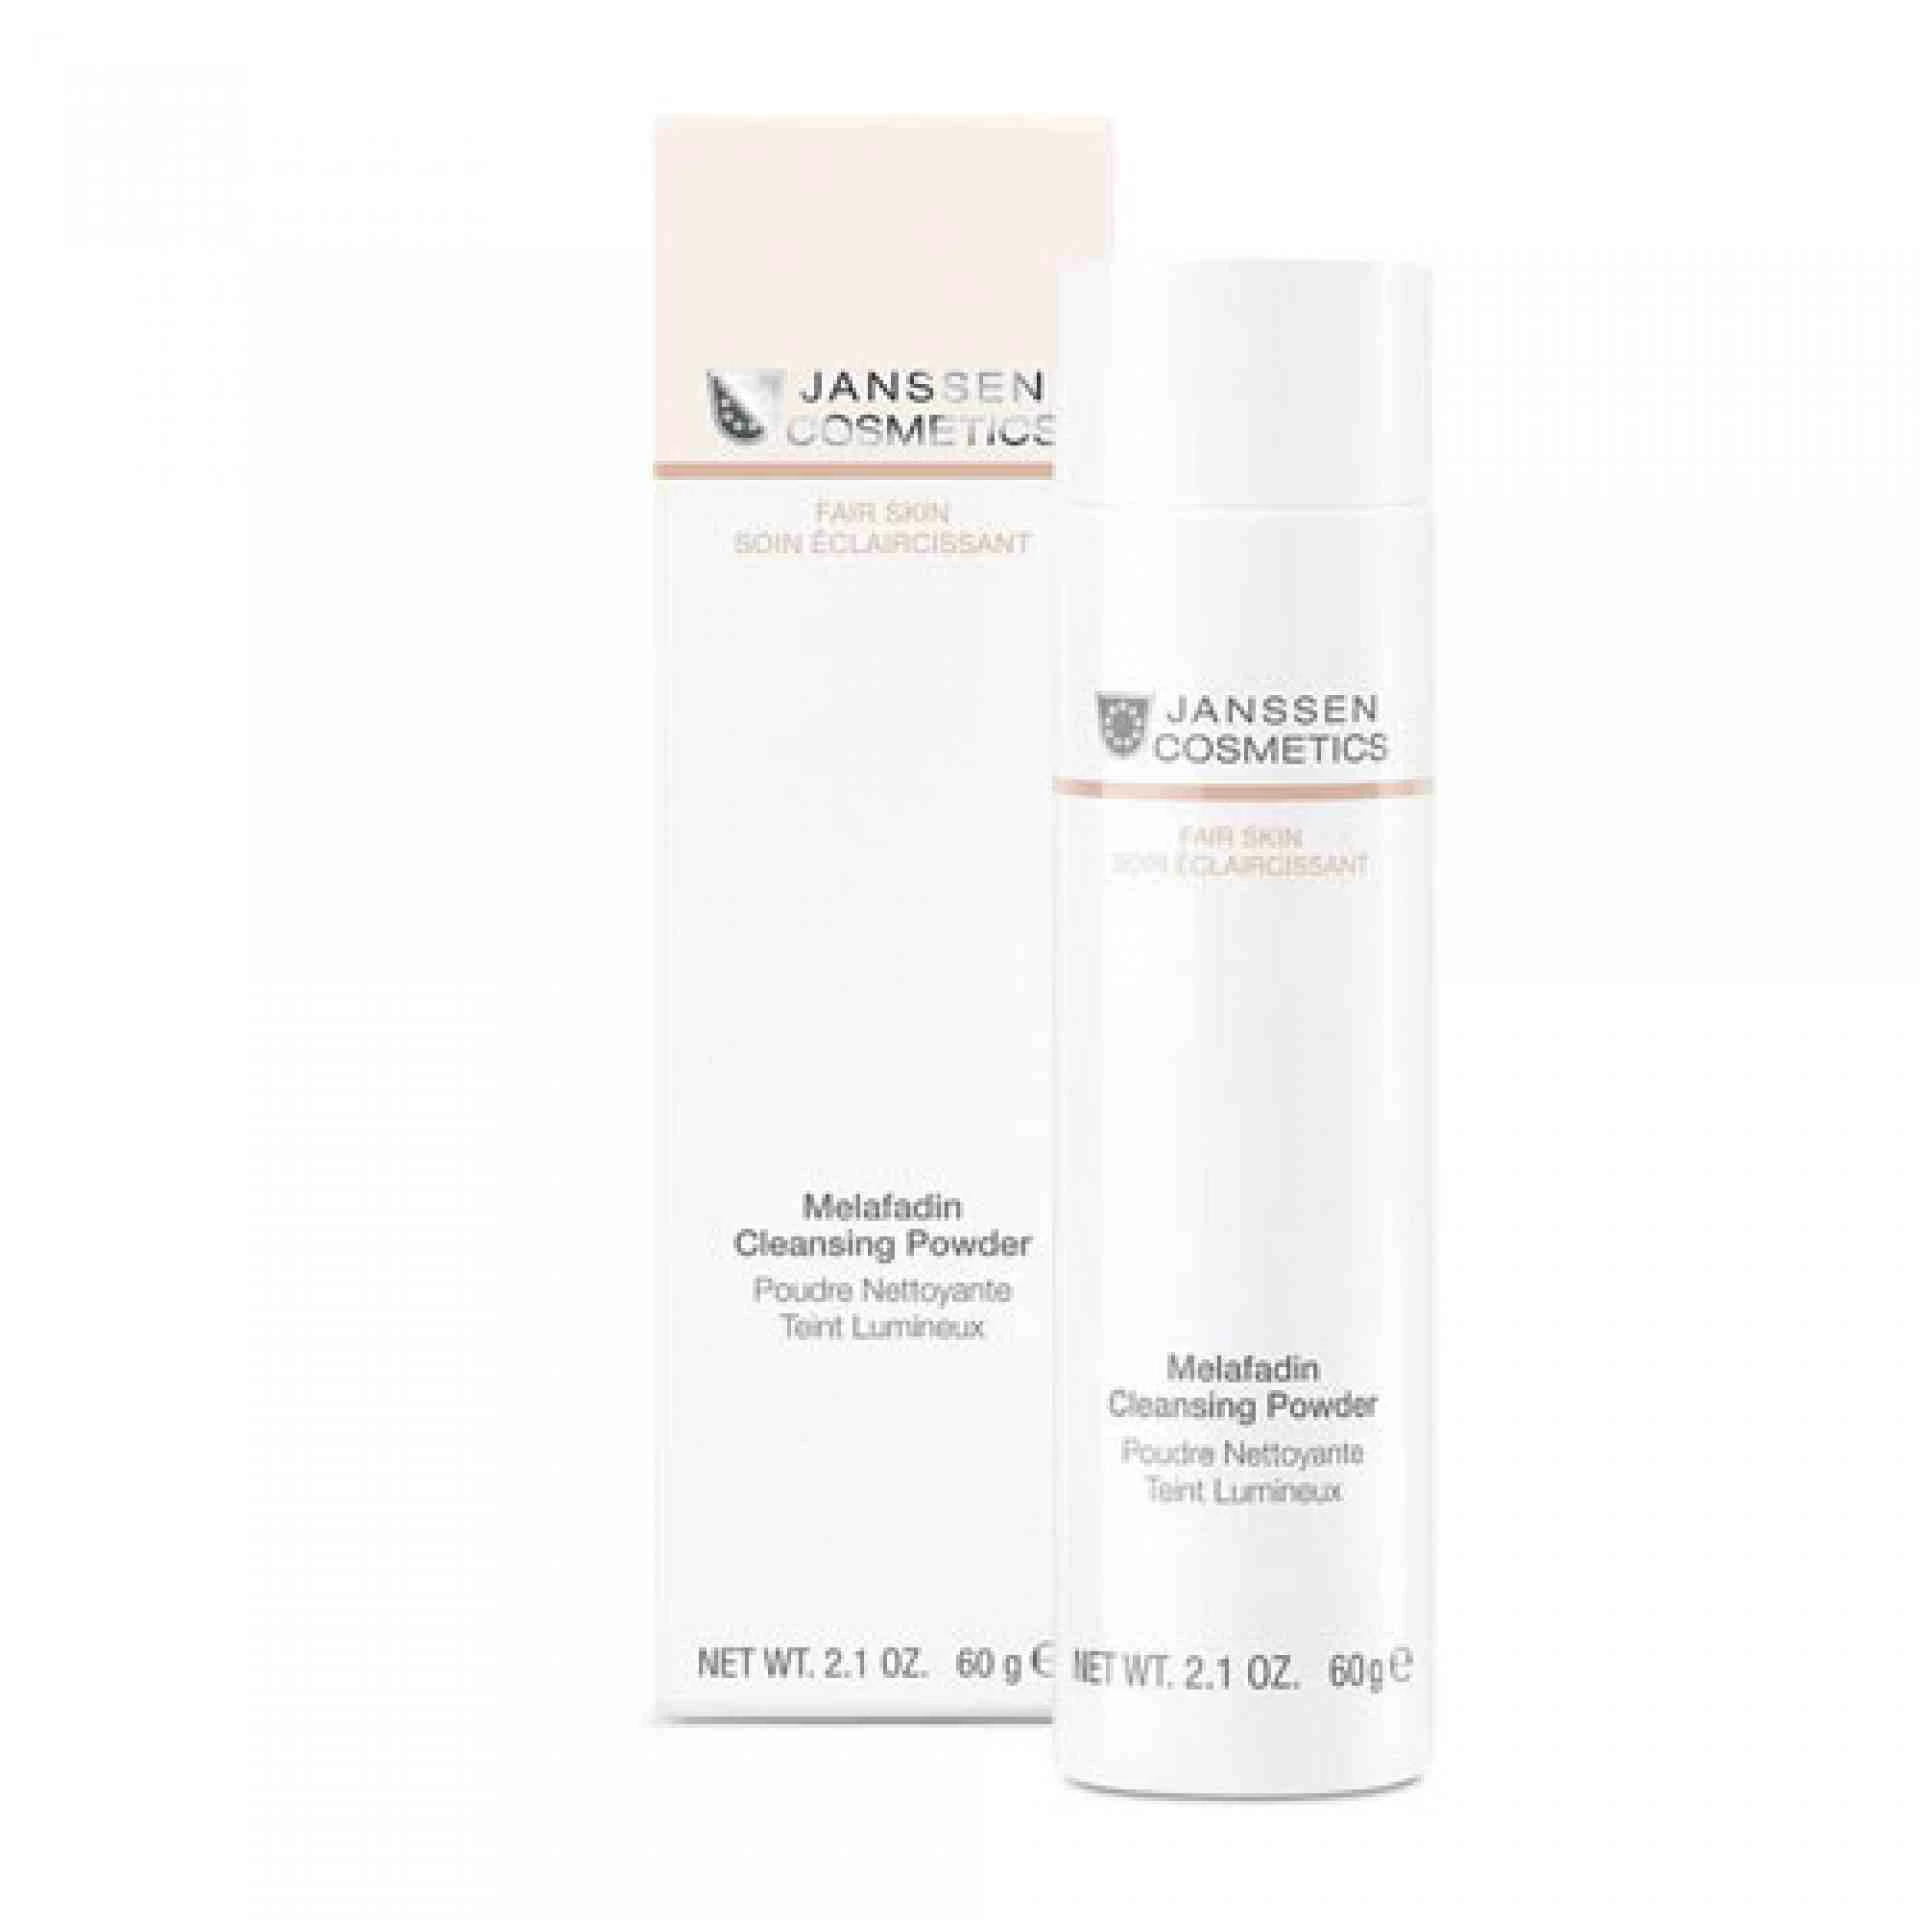 Fair Skin Melafadin Cleansing Powder 60g Janssen Cosmetics®